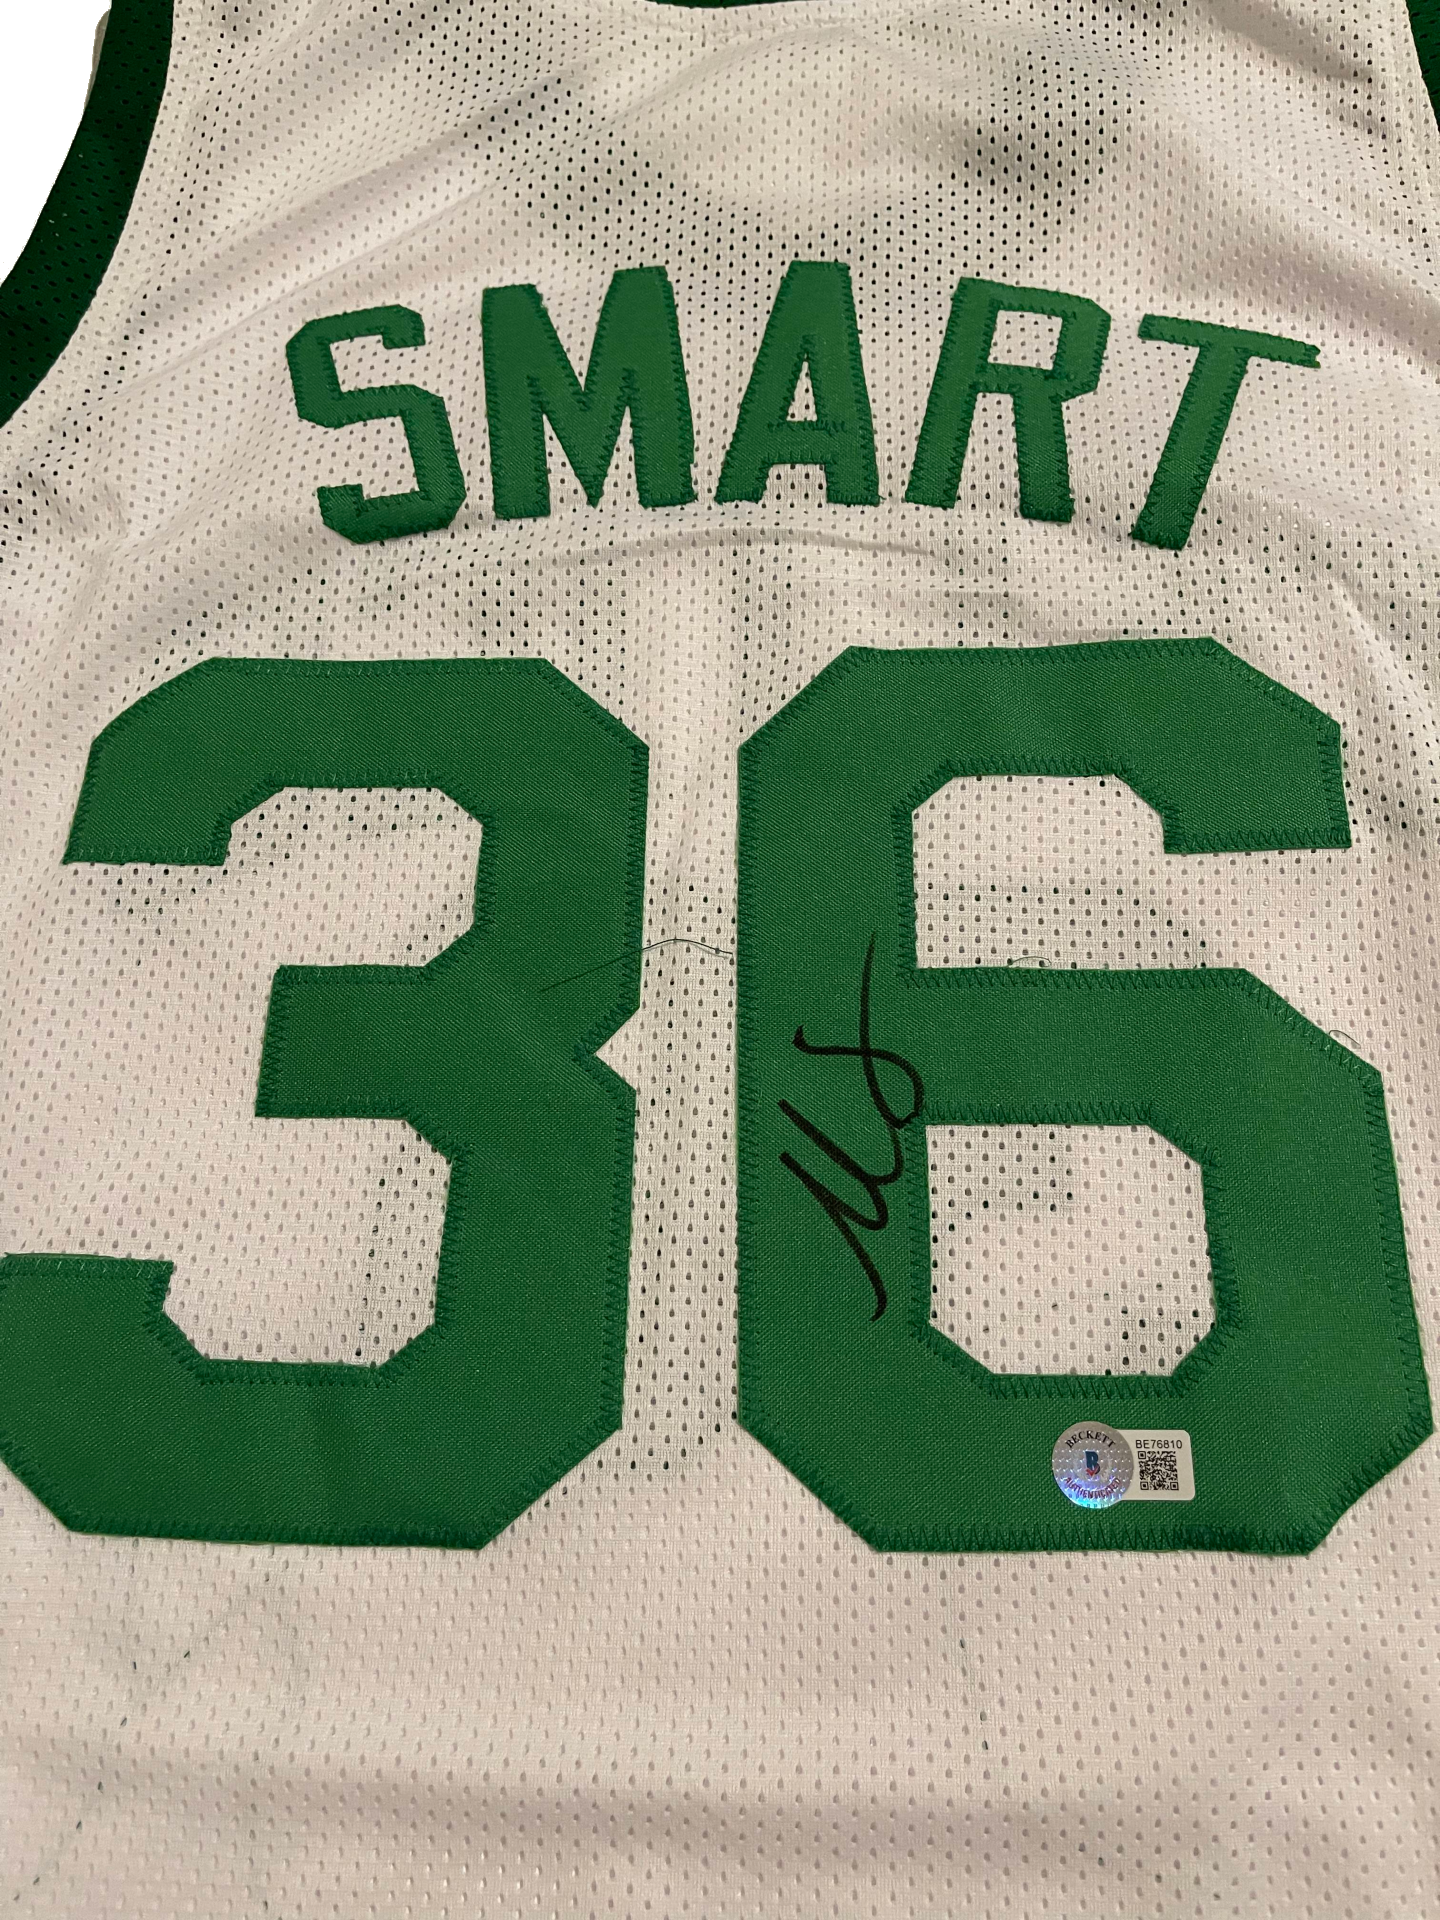 Marcus Smart - Celtics Jersey | Poster